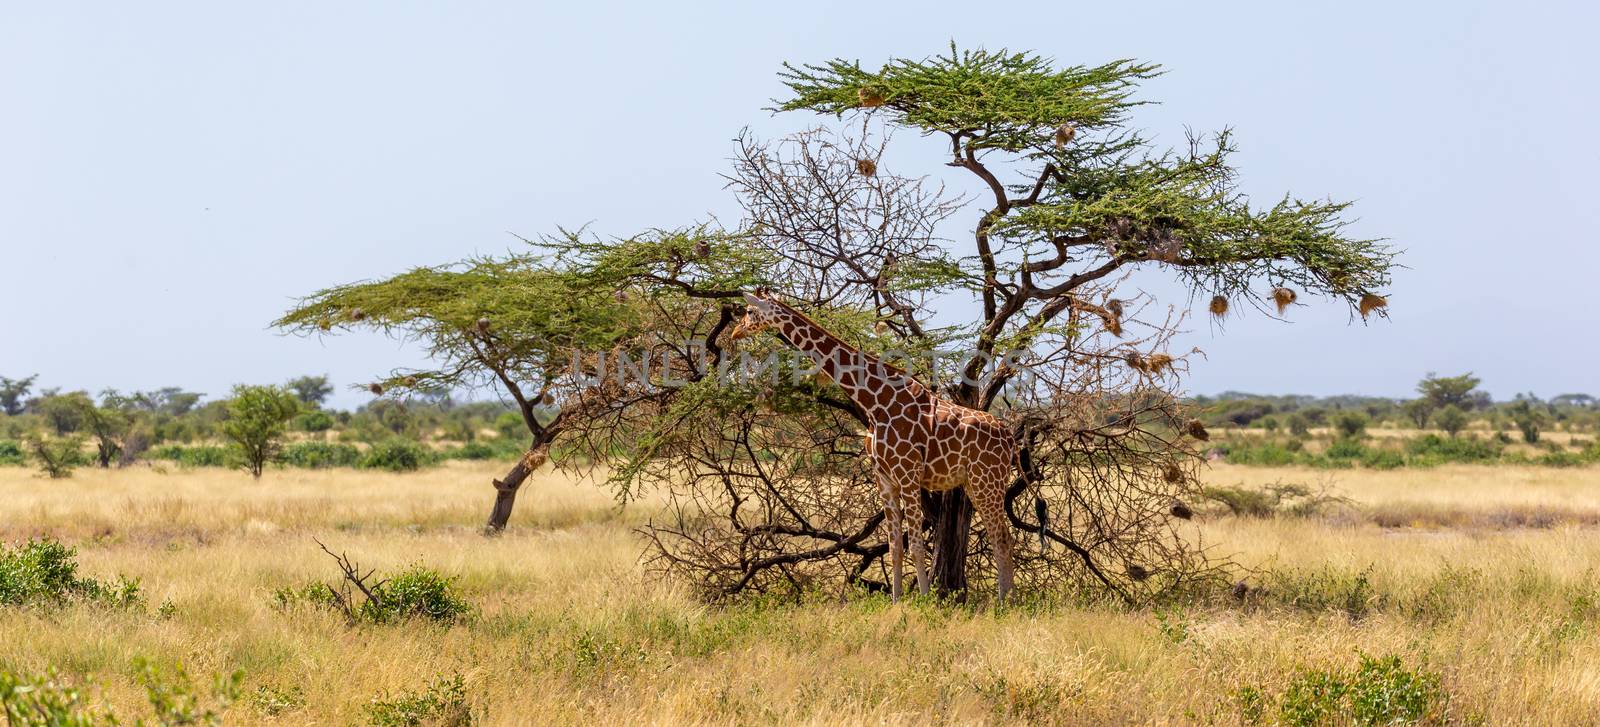 The Somalia giraffes eat the leaves of acacia trees